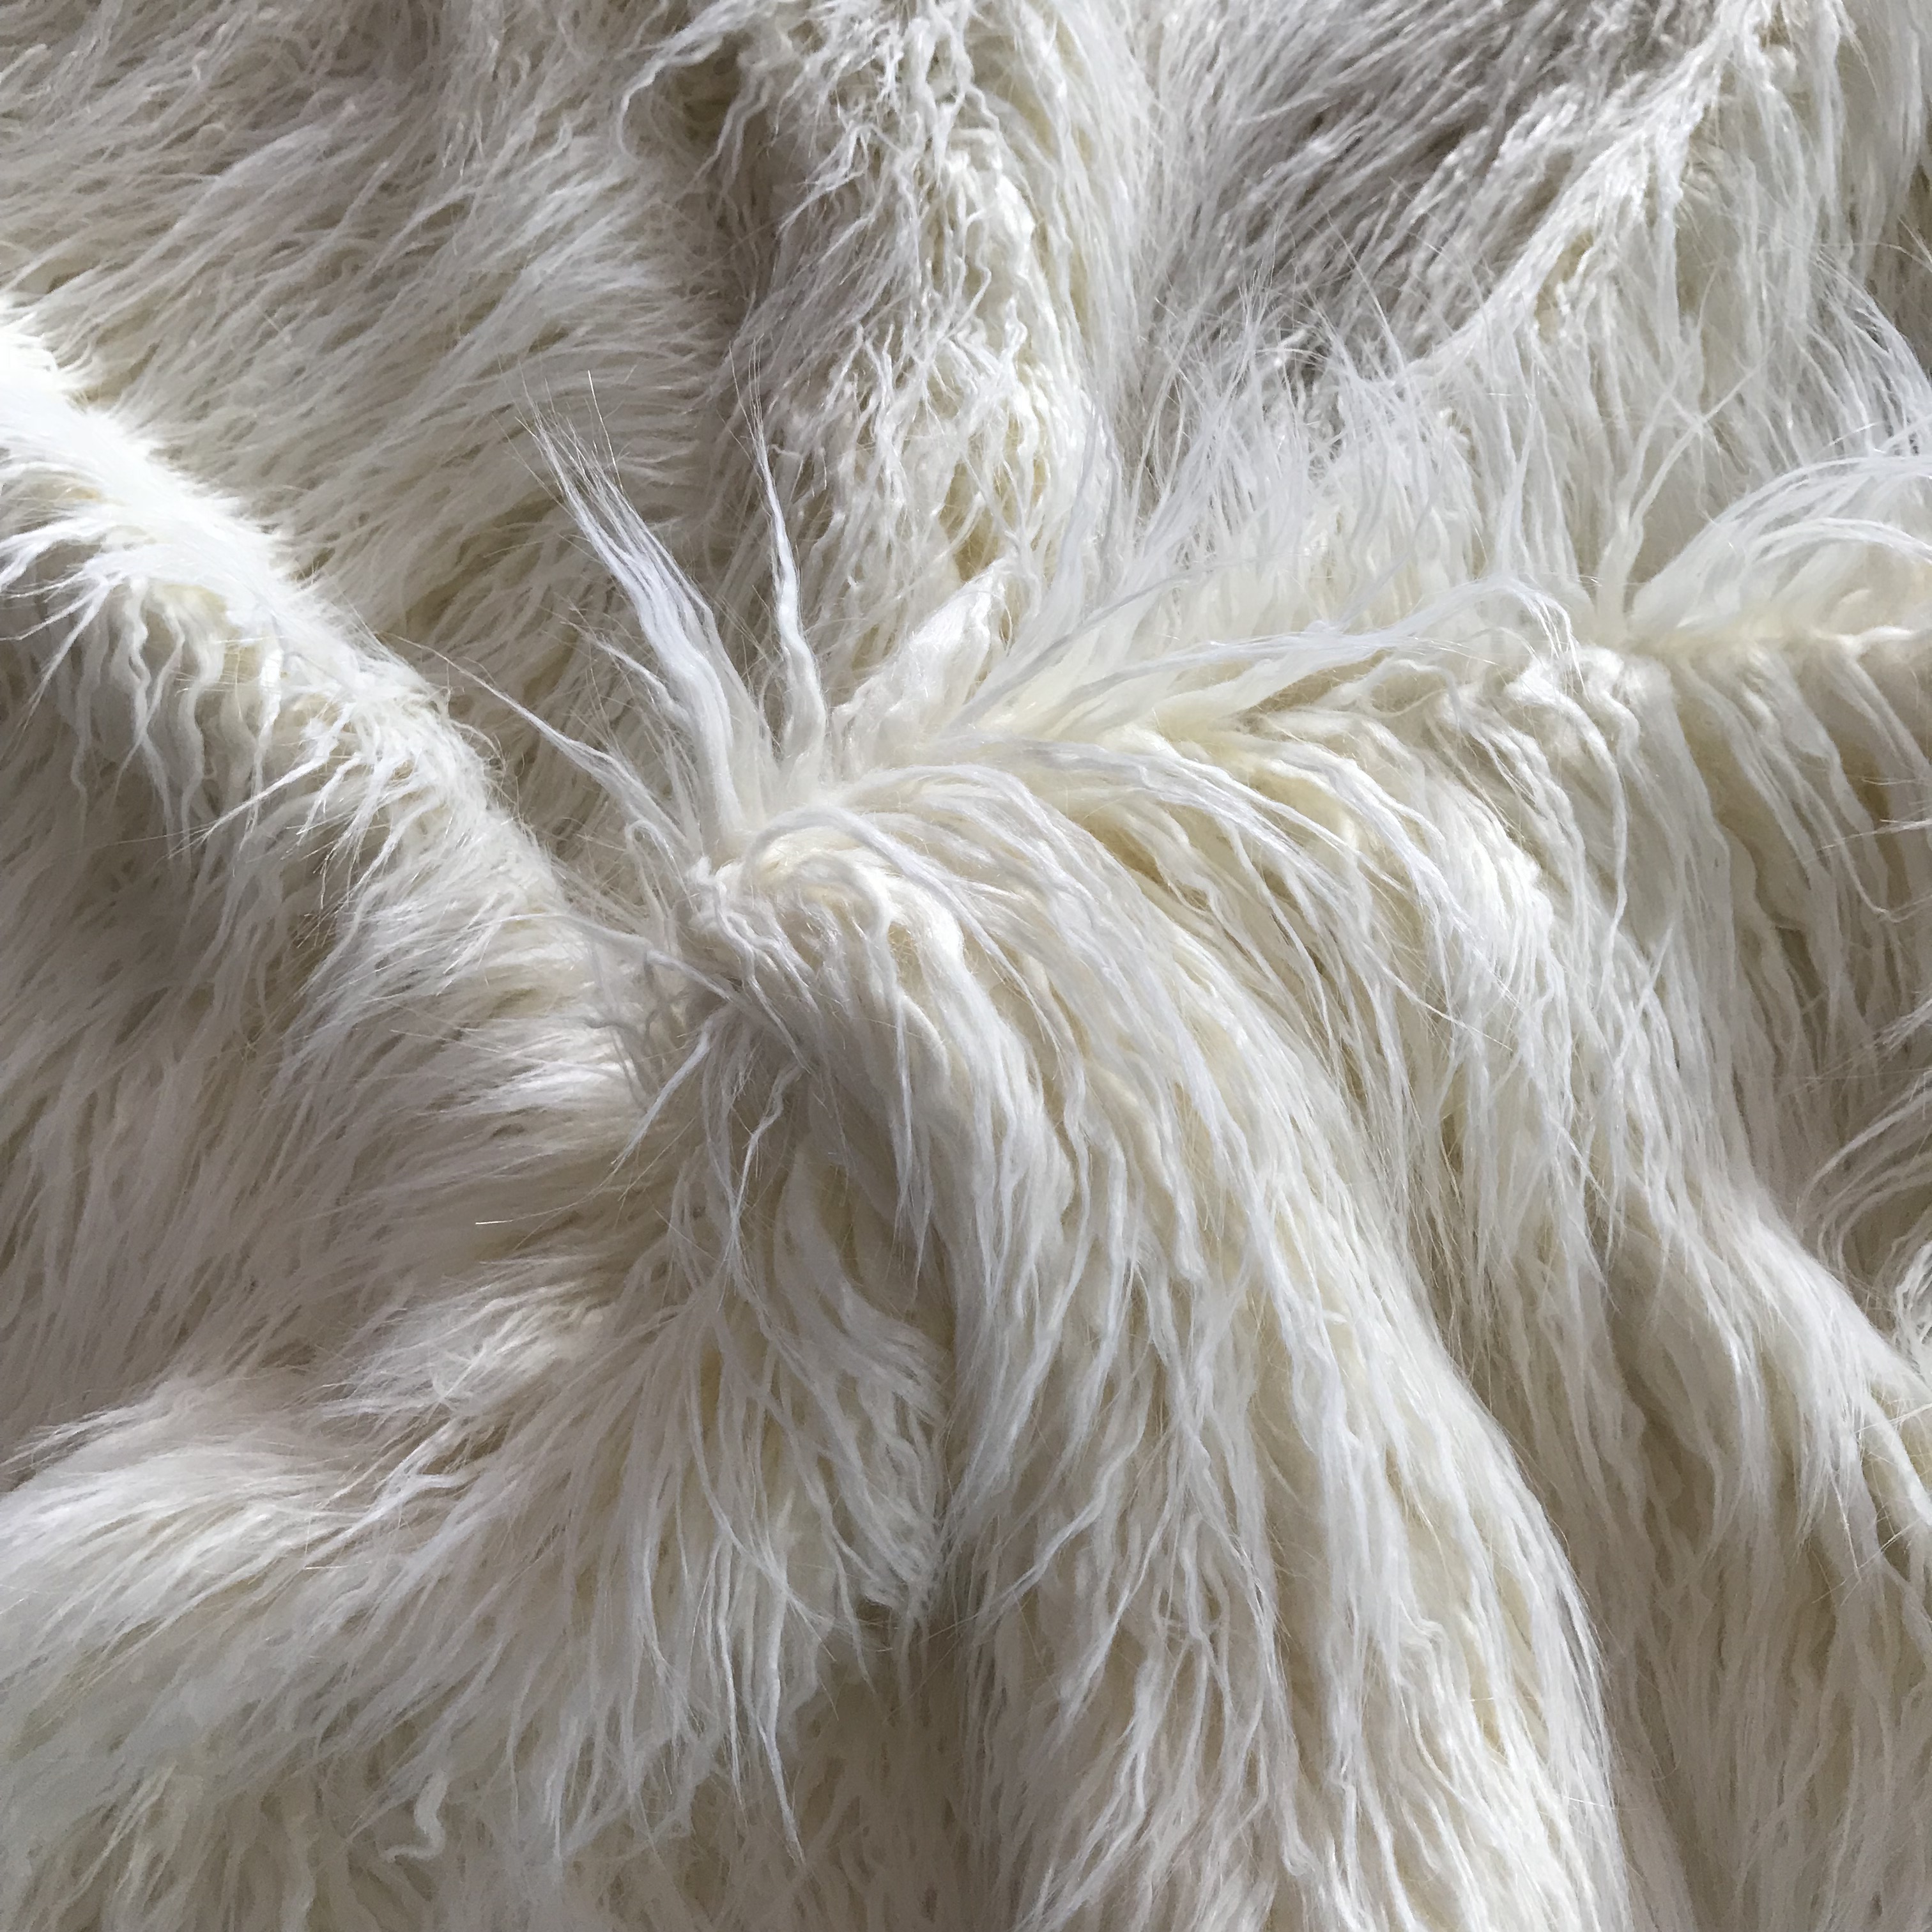 90mm long hair faux fur fabric